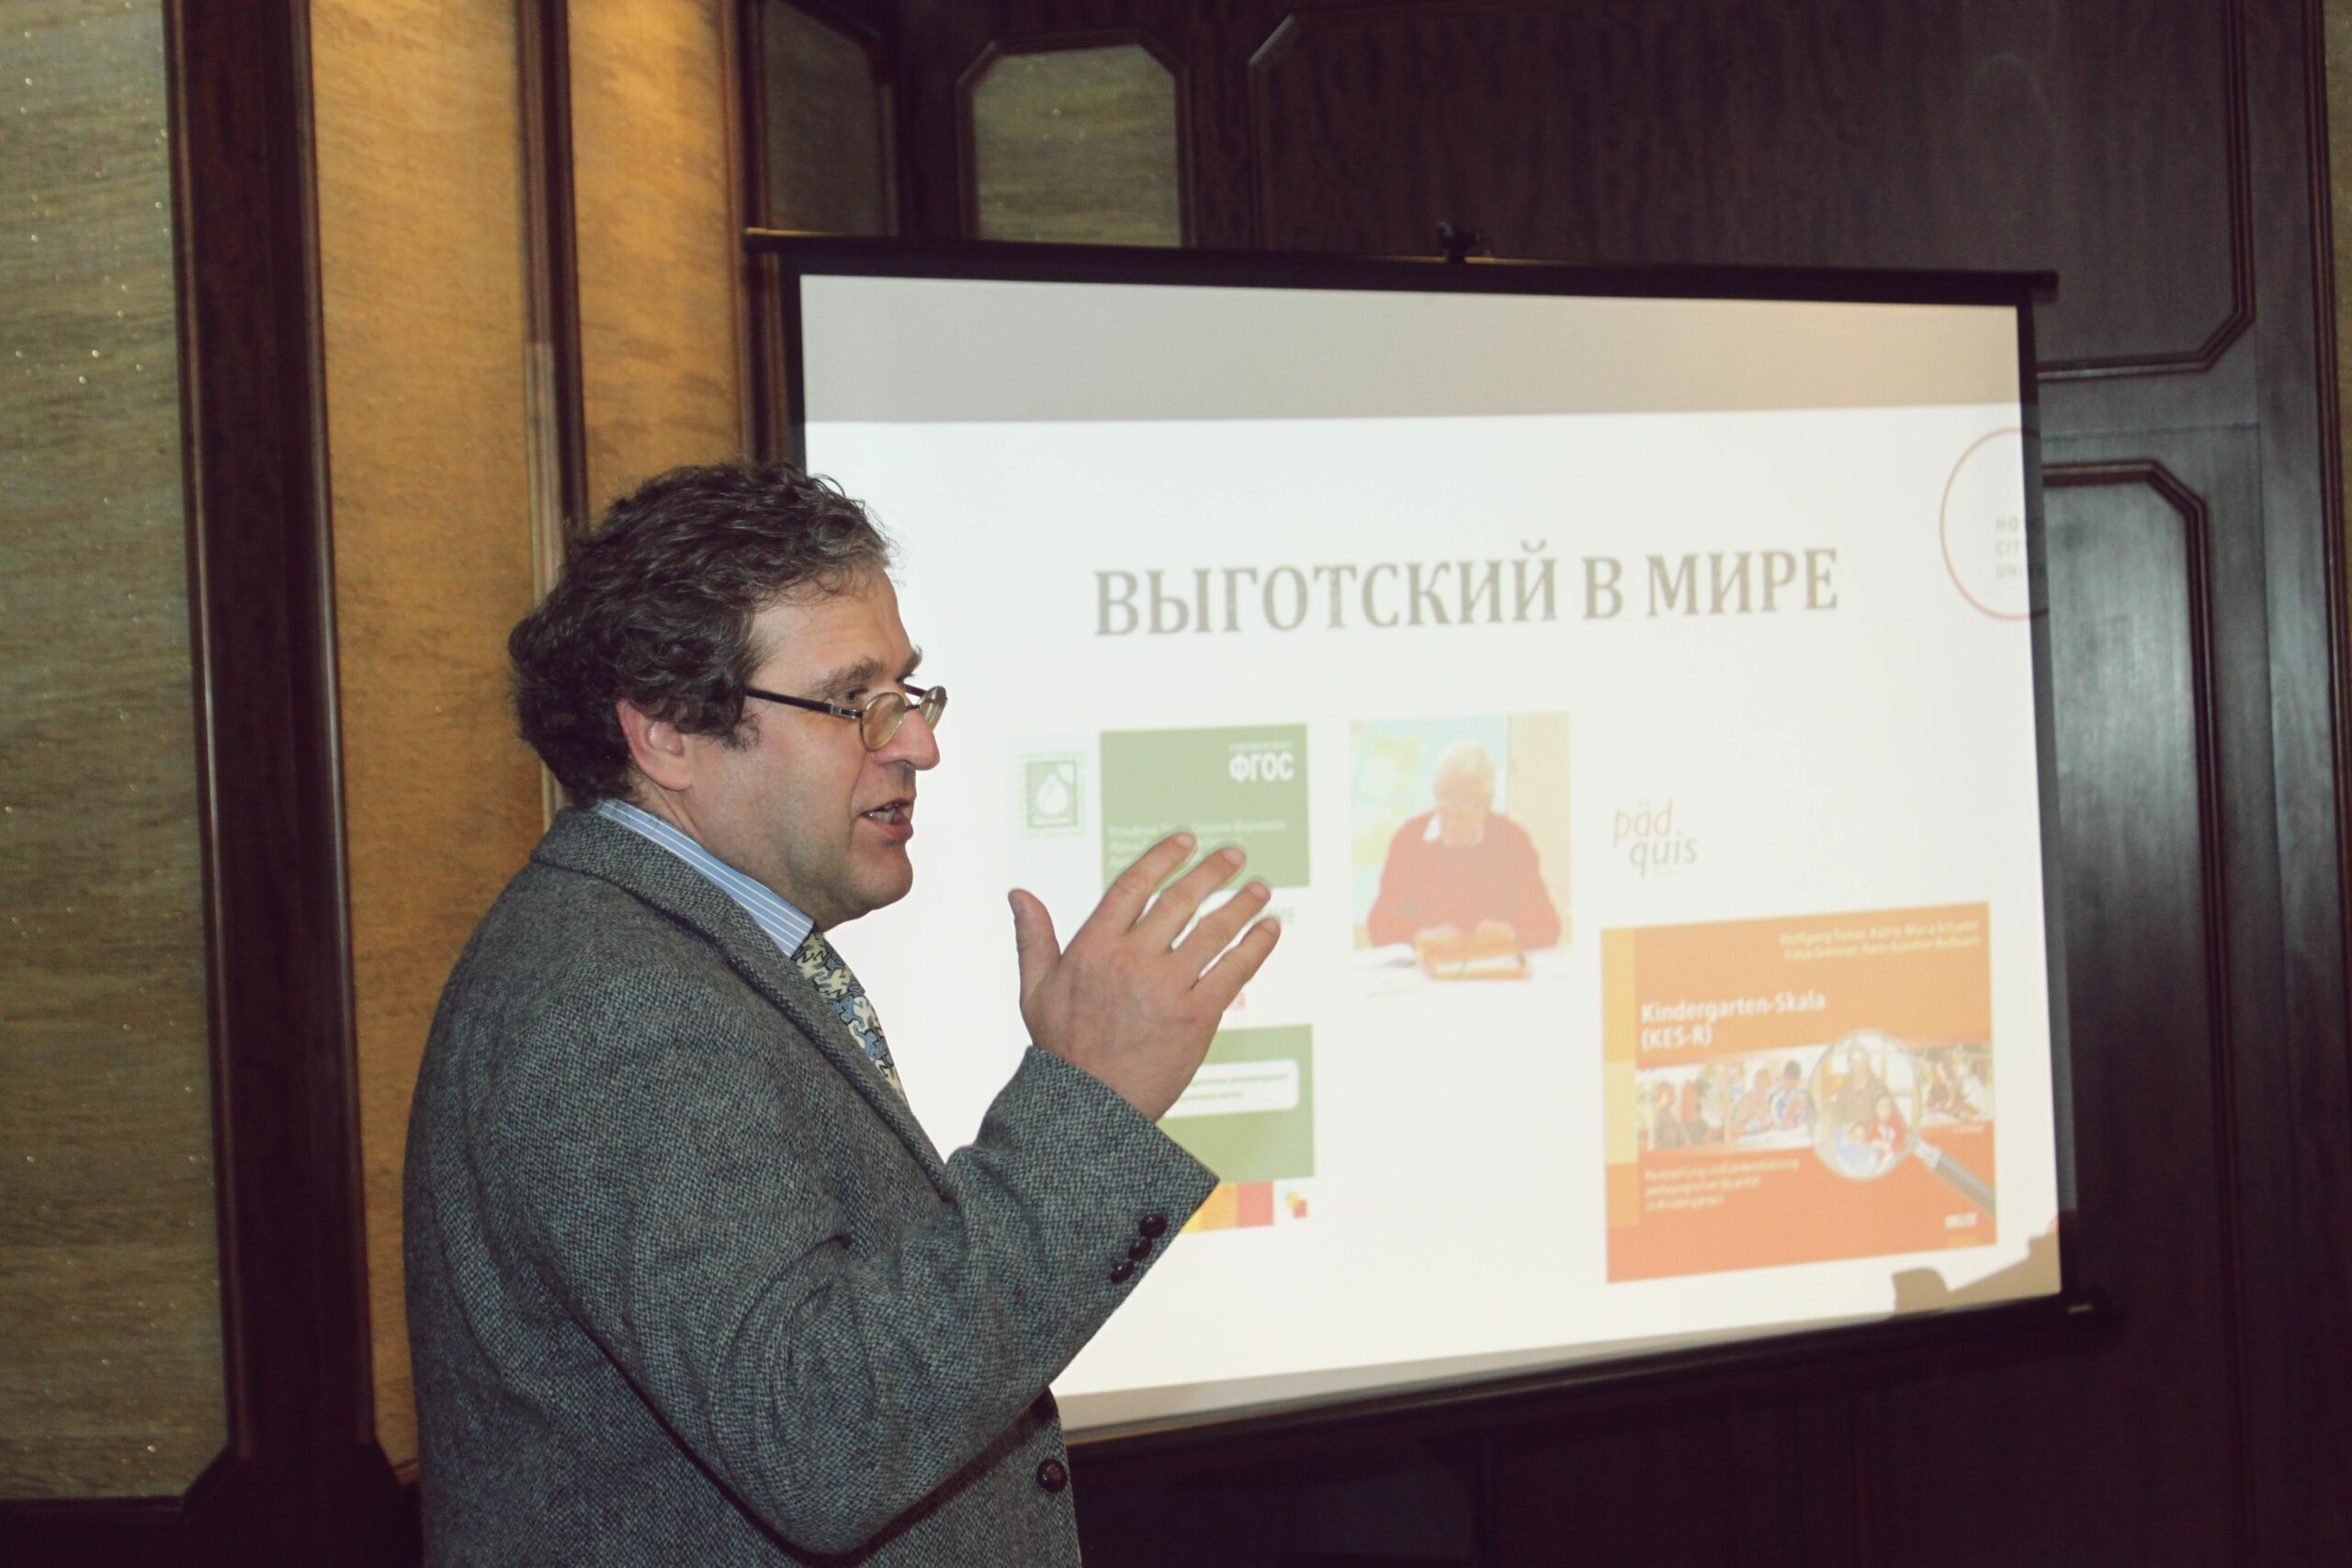 MCU professor at international conference on Vygotsky’s anniversary